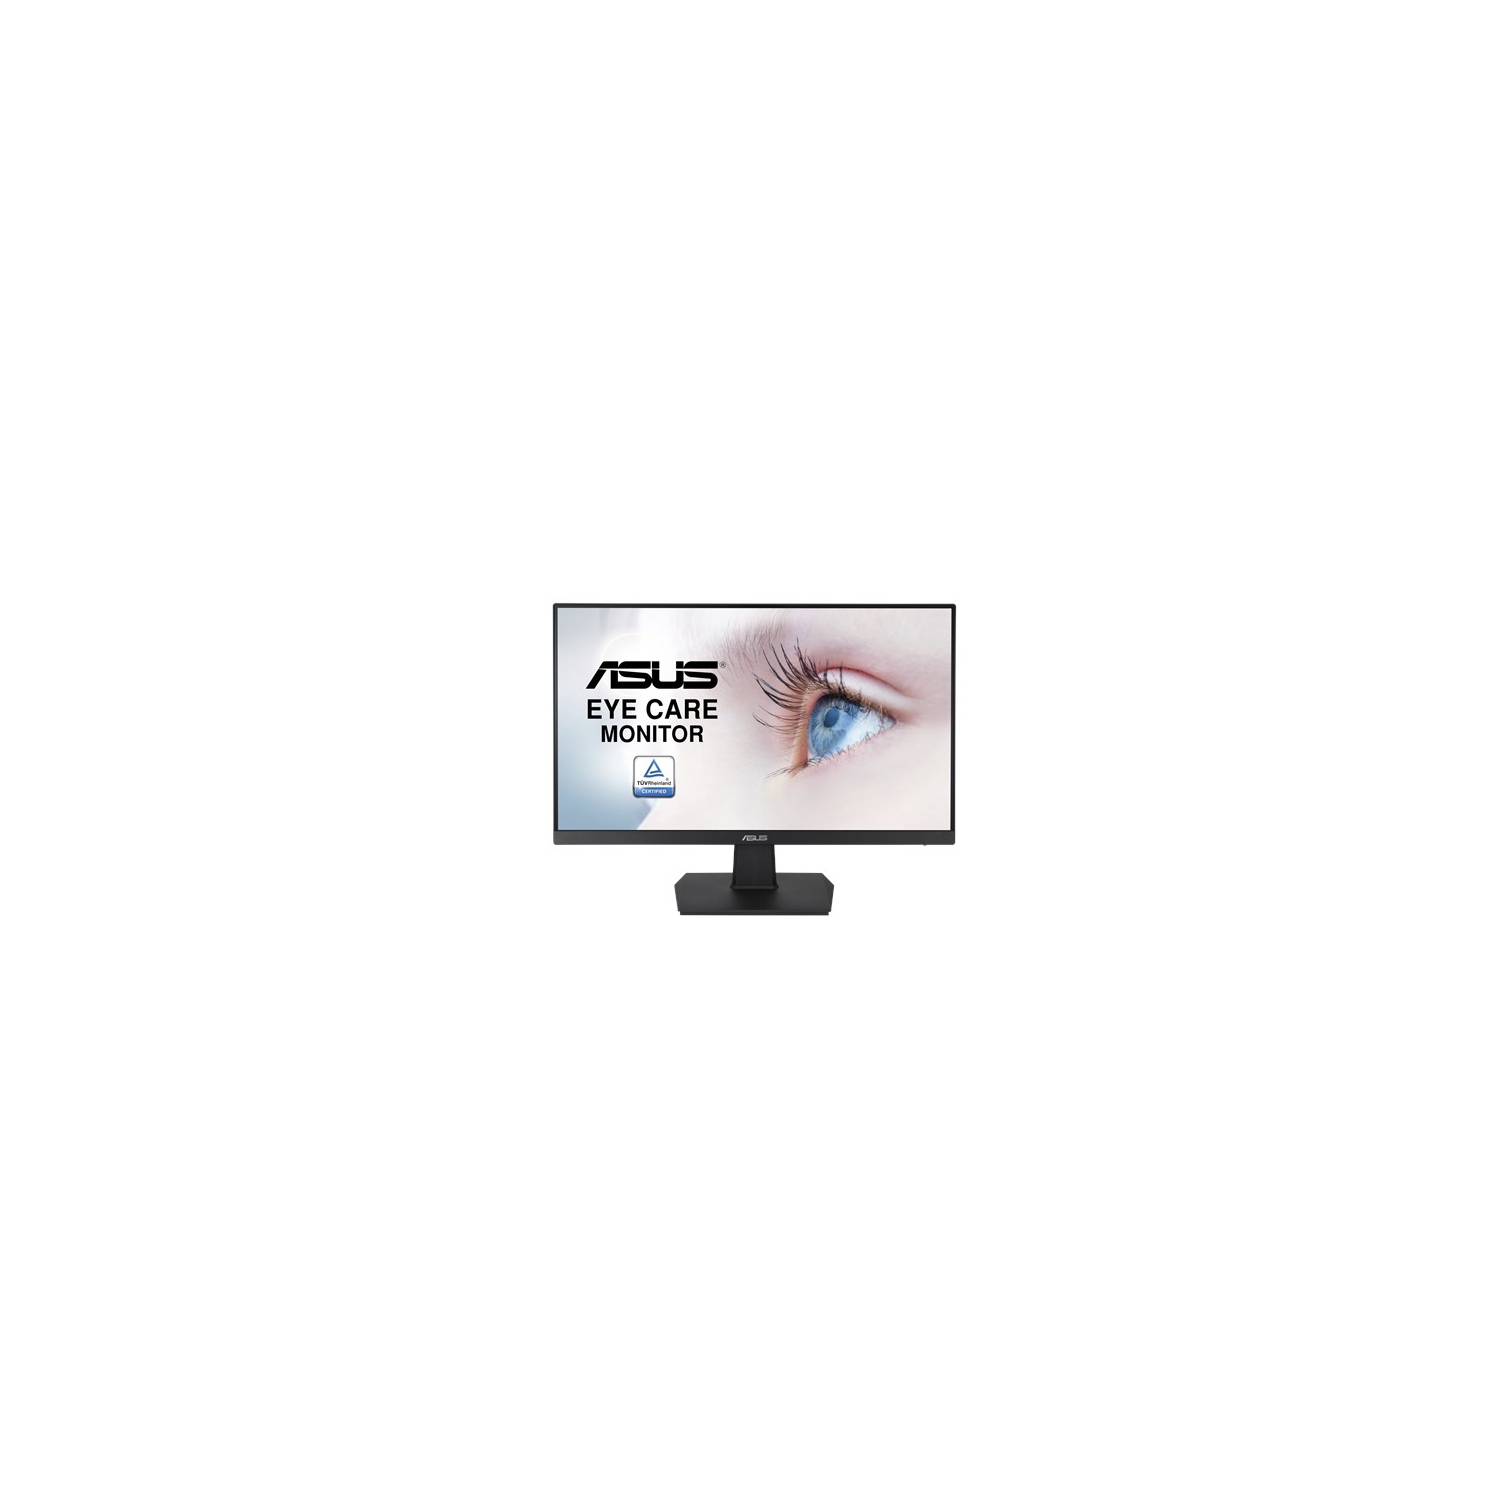 Asus 23.8" FHD 75Hz 5ms GTG IPS LCD Monitor (VA24EHE) - Black